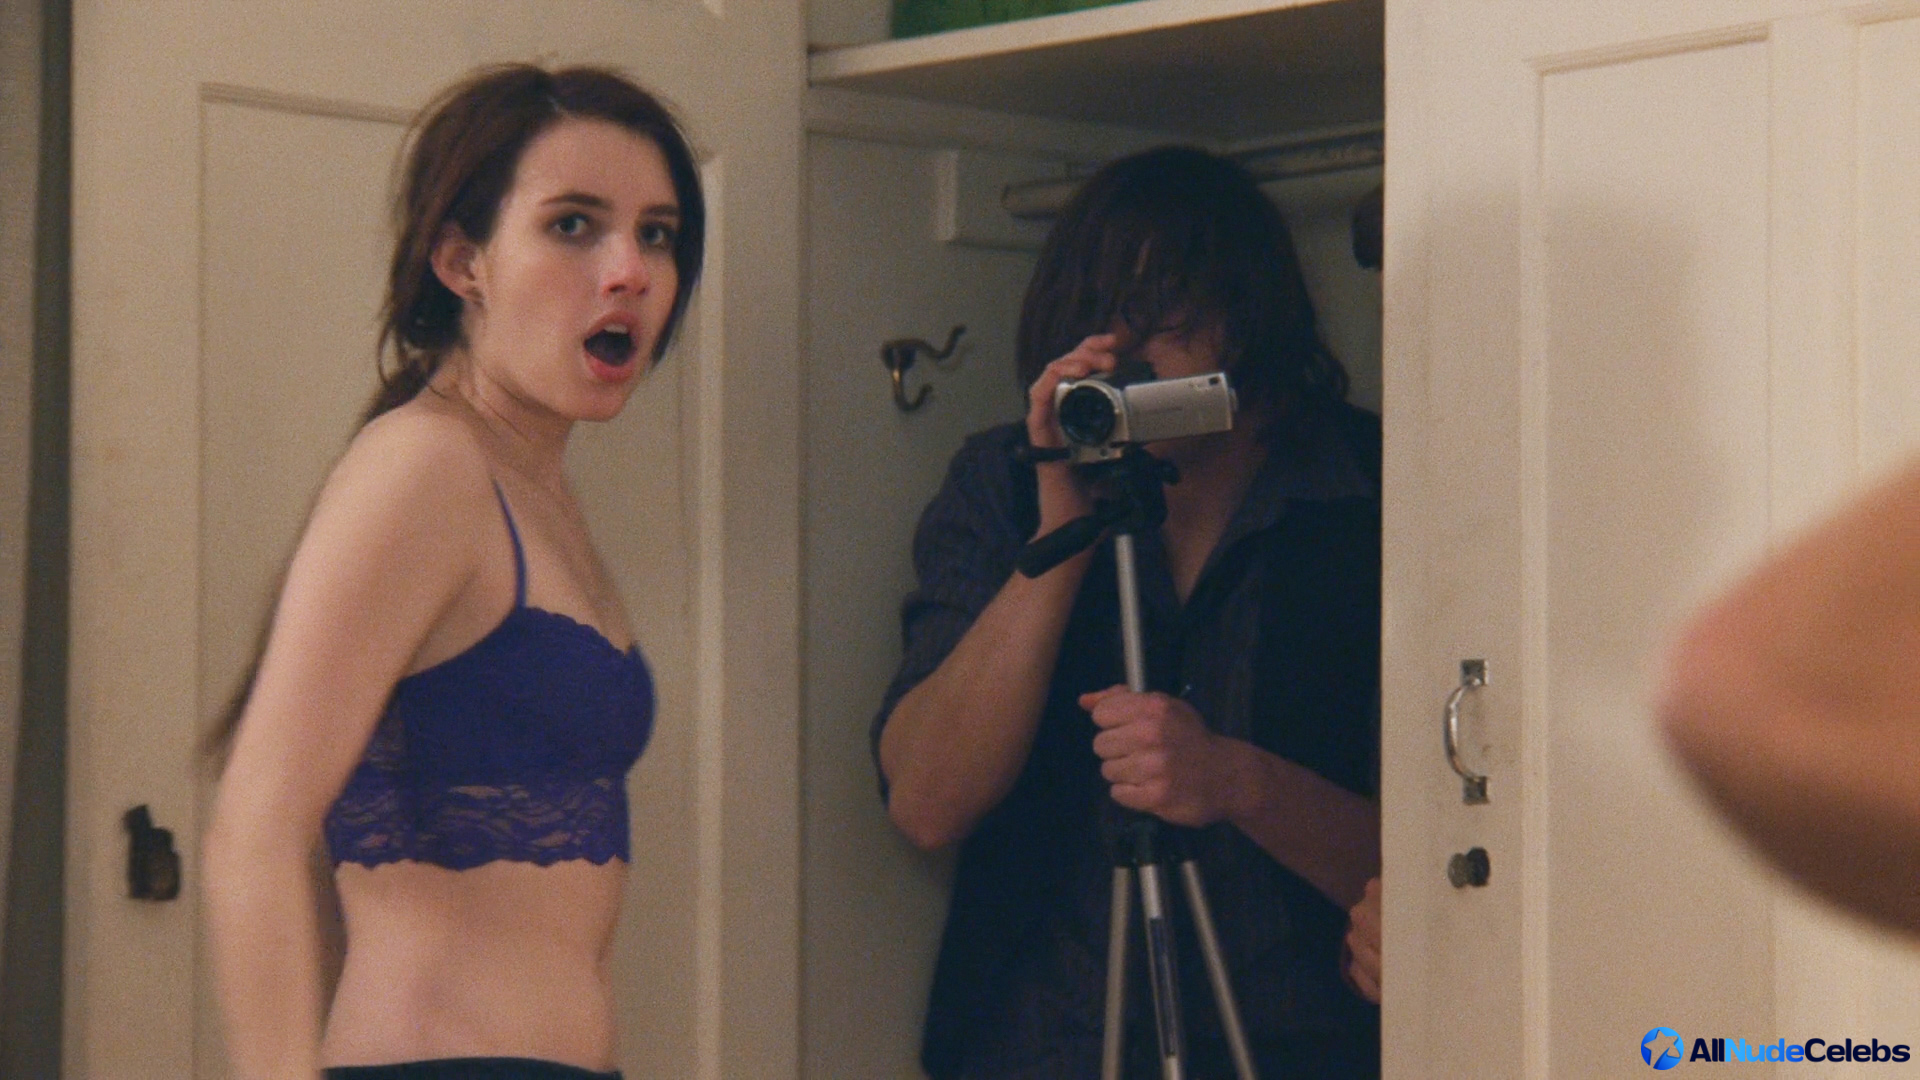 Emma Roberts nude movie scenes.